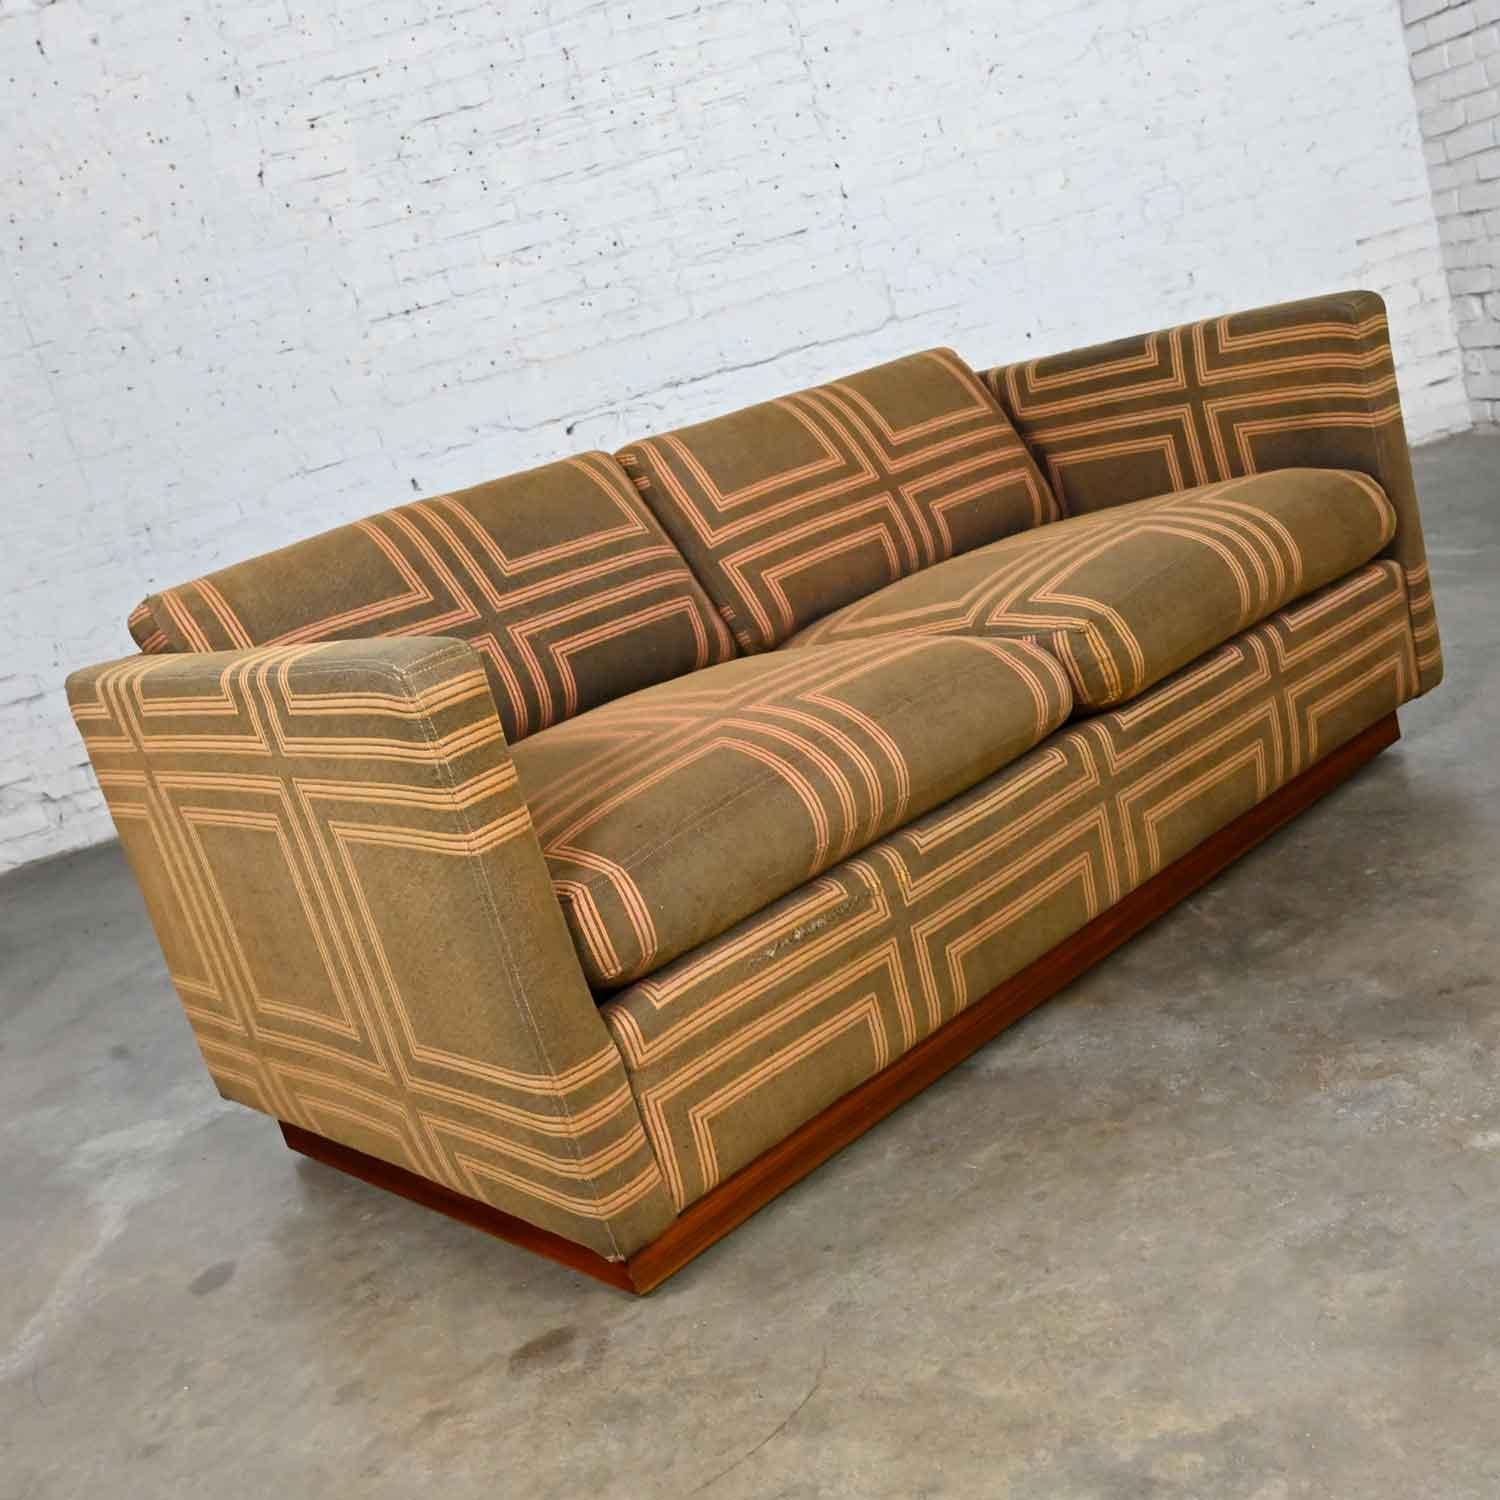 20th Century Modern Tuxedo Love Seat Sofa by Milo Baughman for Thayer Coggin Designer's Group